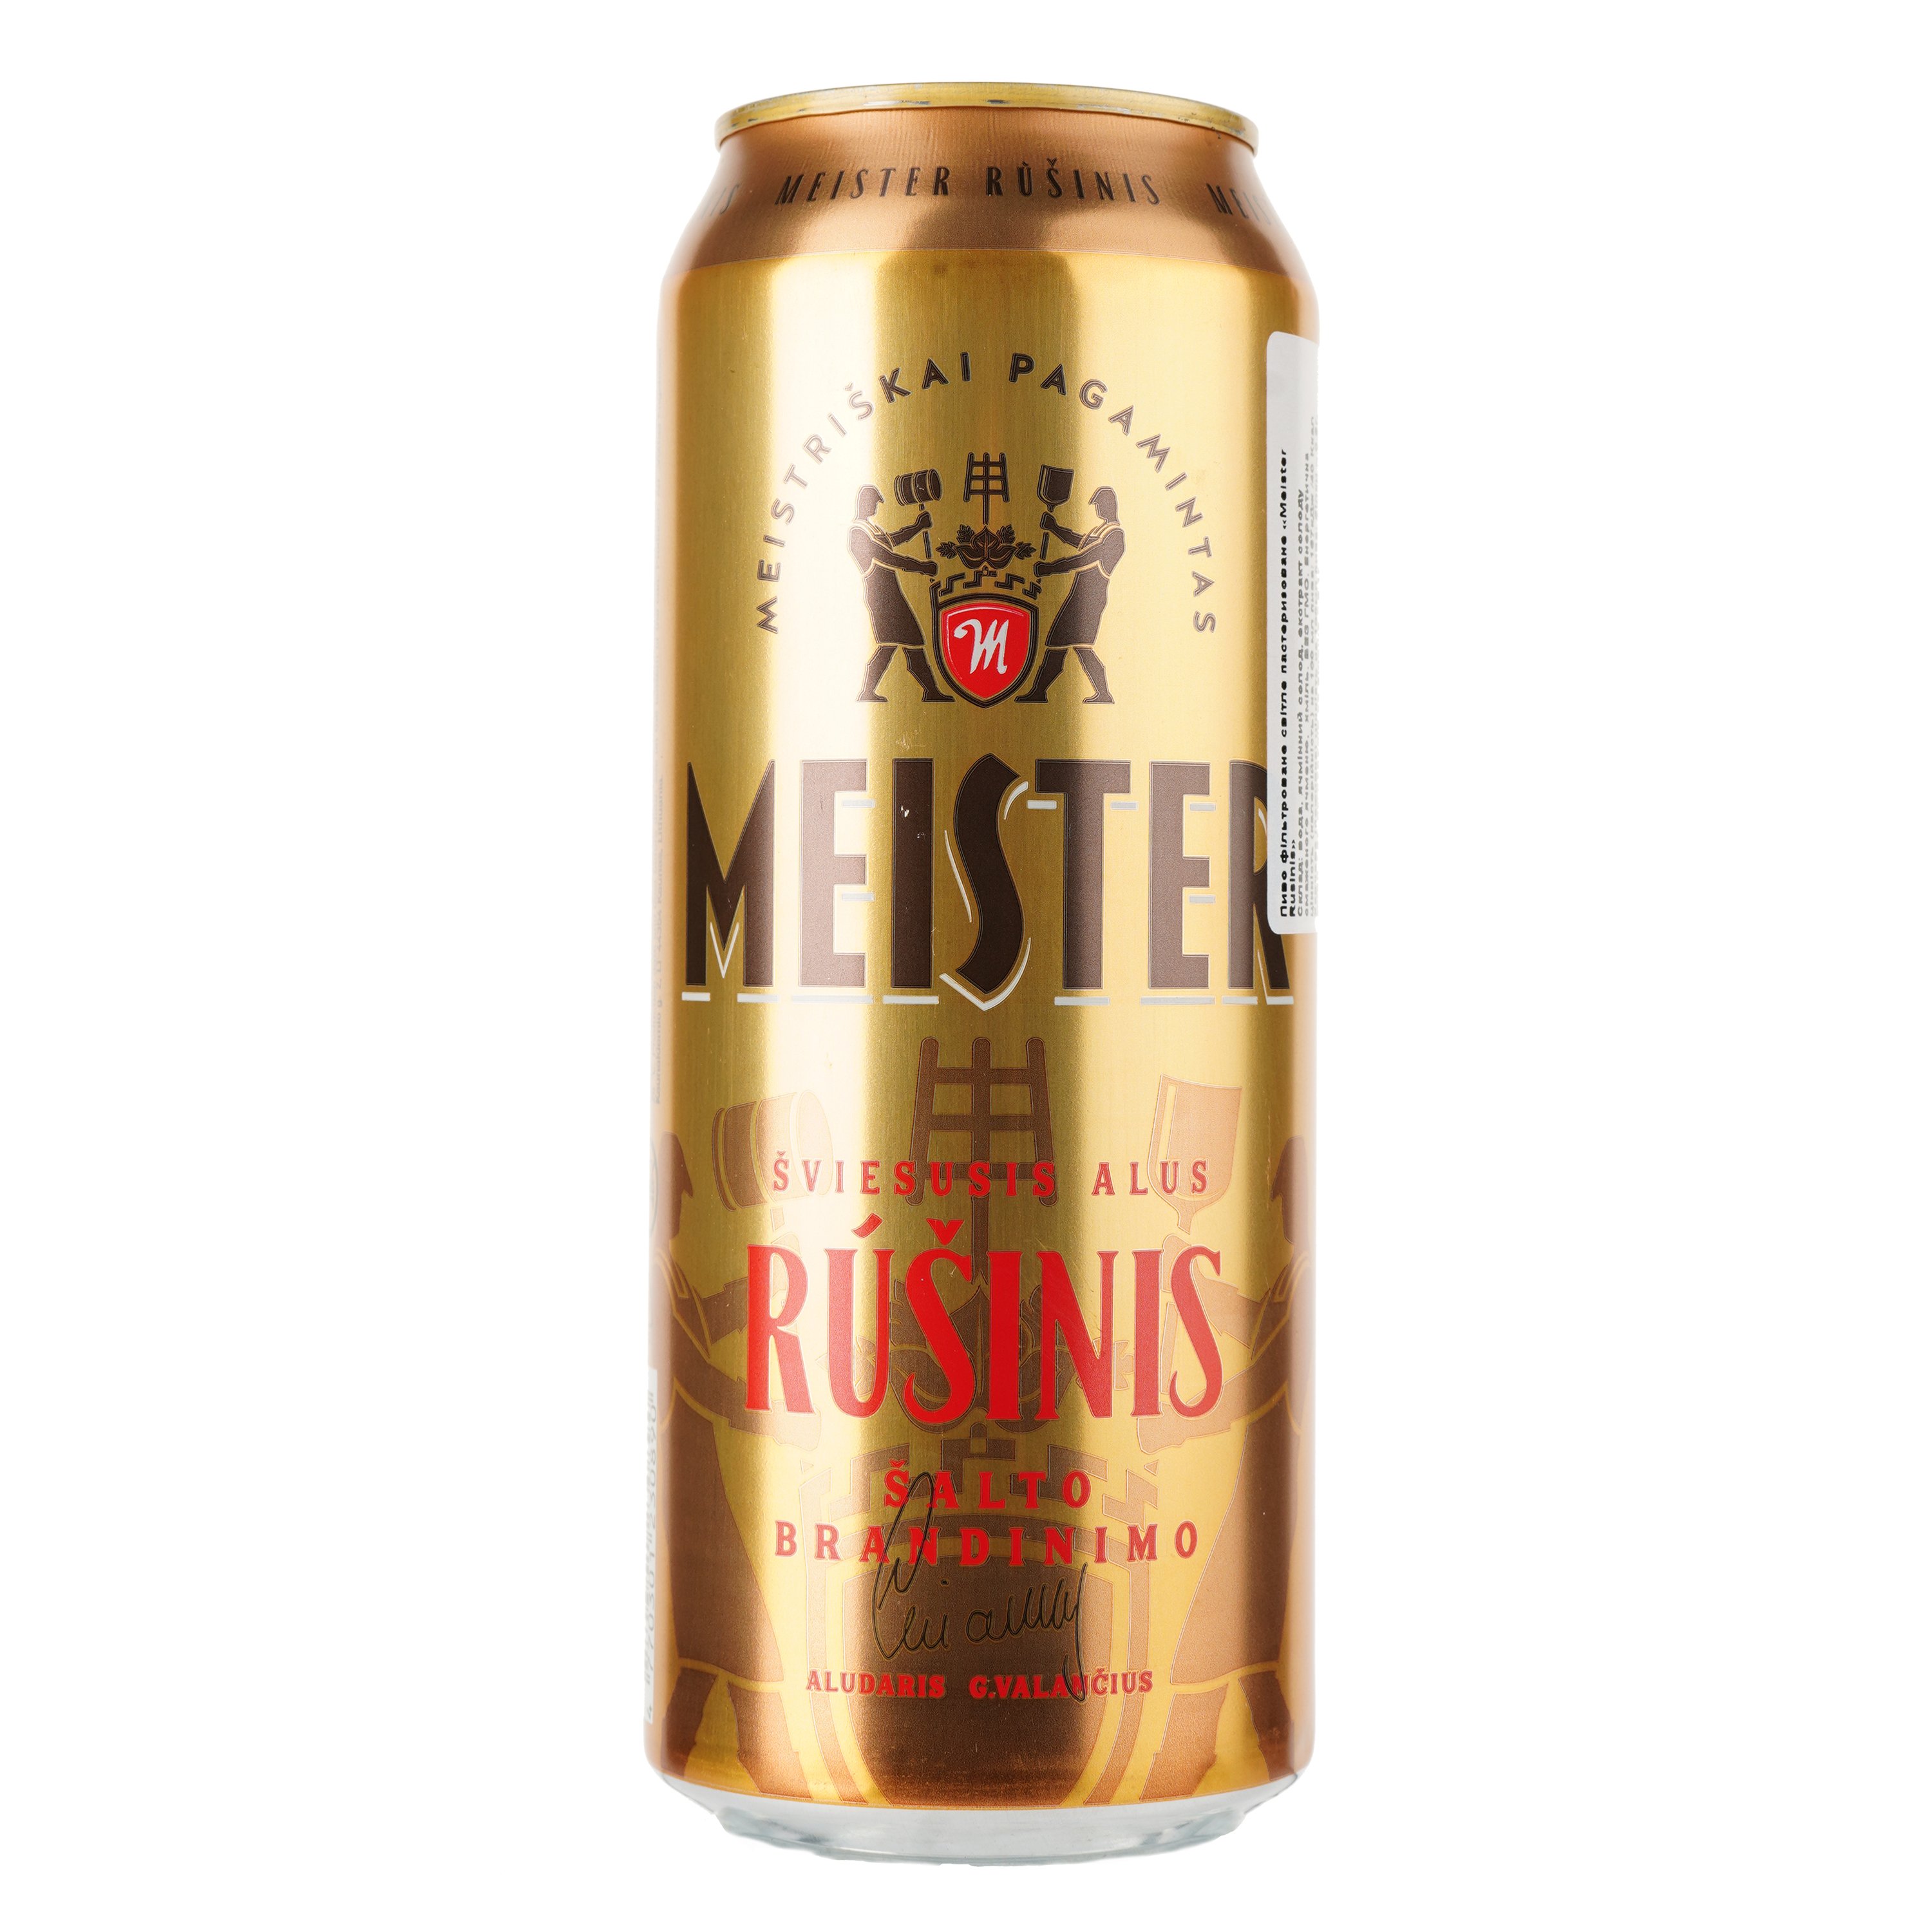 Пиво Meister Rusinis світле, 5.2%, з/б, 0.5 л - фото 1